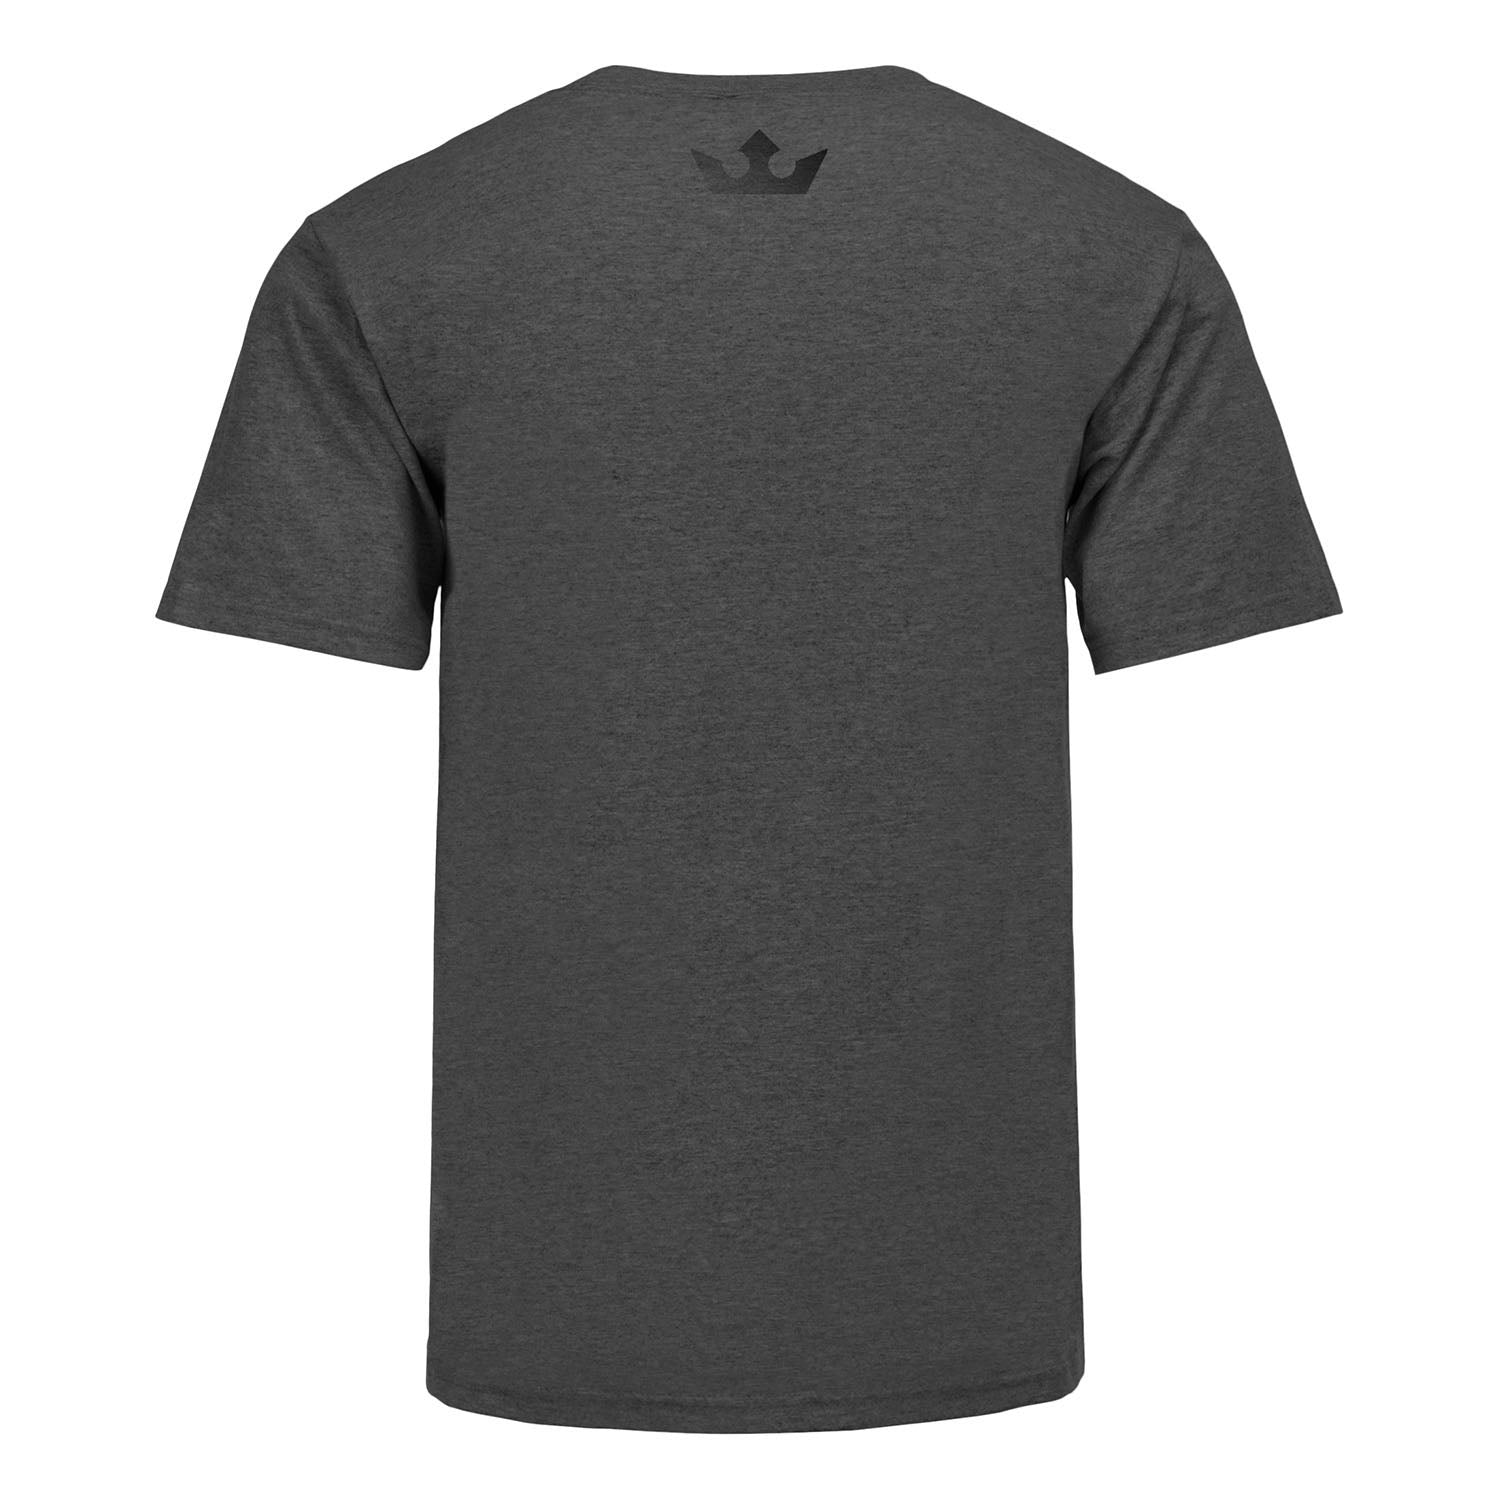 PFL Loud Left T-Shirt in Dark Grey Heather - Front View